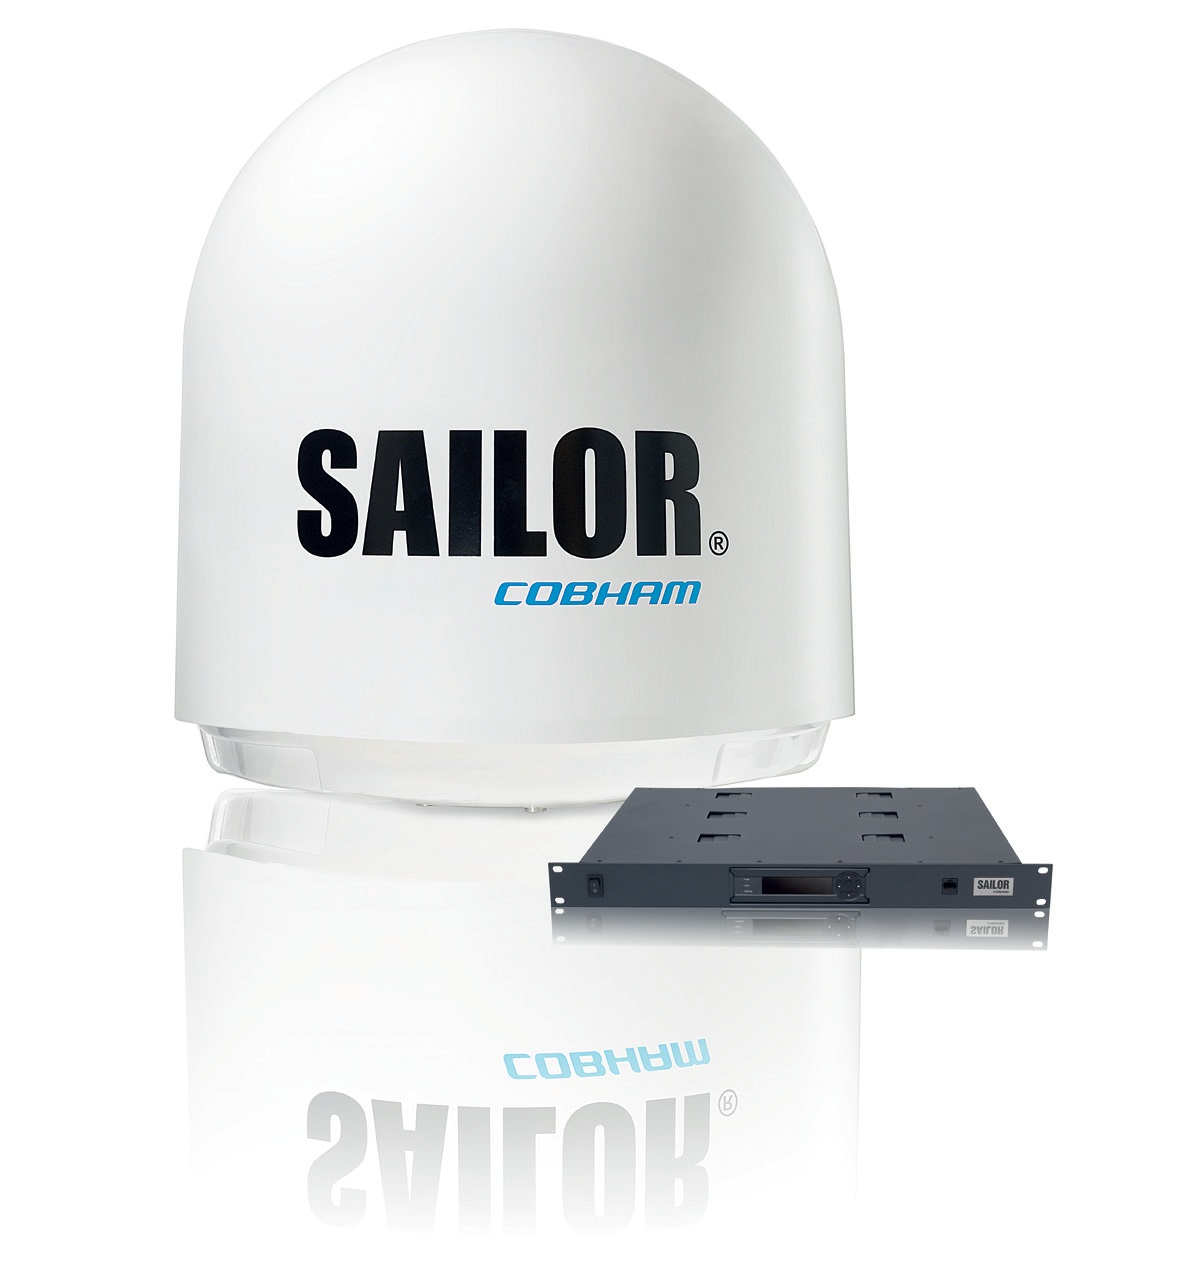 Sailor VSAT 800